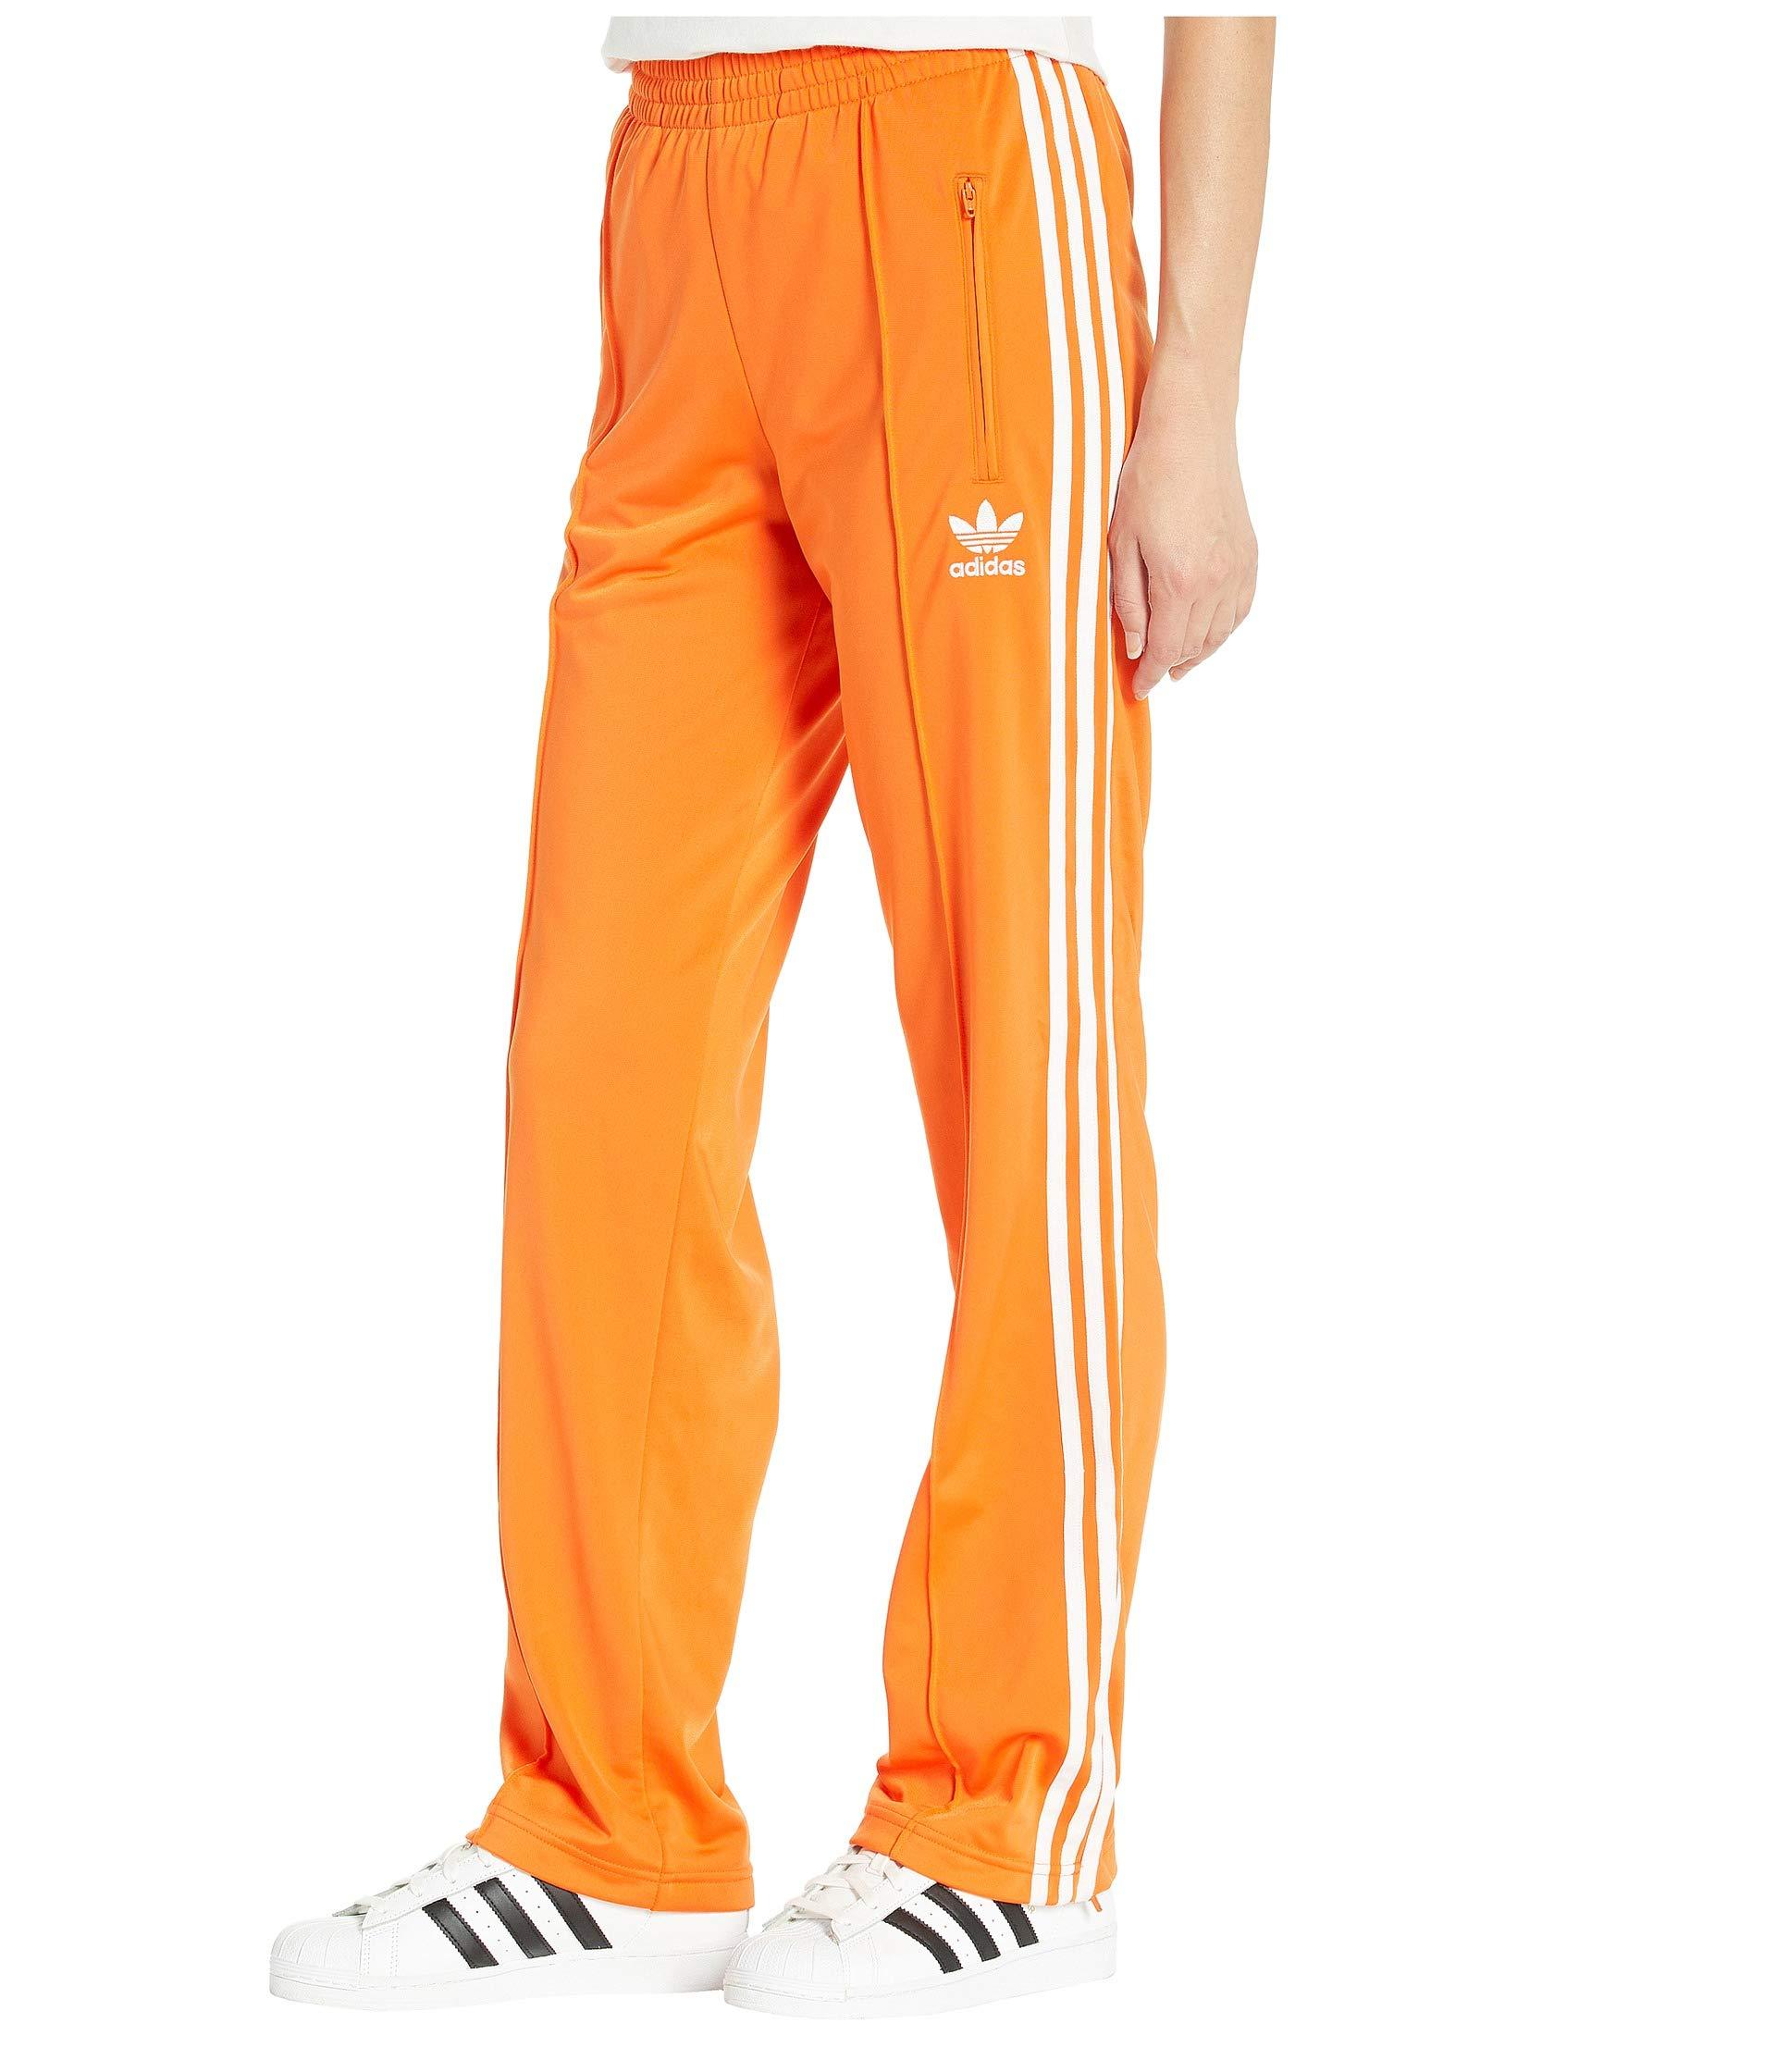 https://cdna.lystit.com/photos/zappos/0f65cd58/adidas-originals-Orange-Firebird-Track-Pants.jpeg